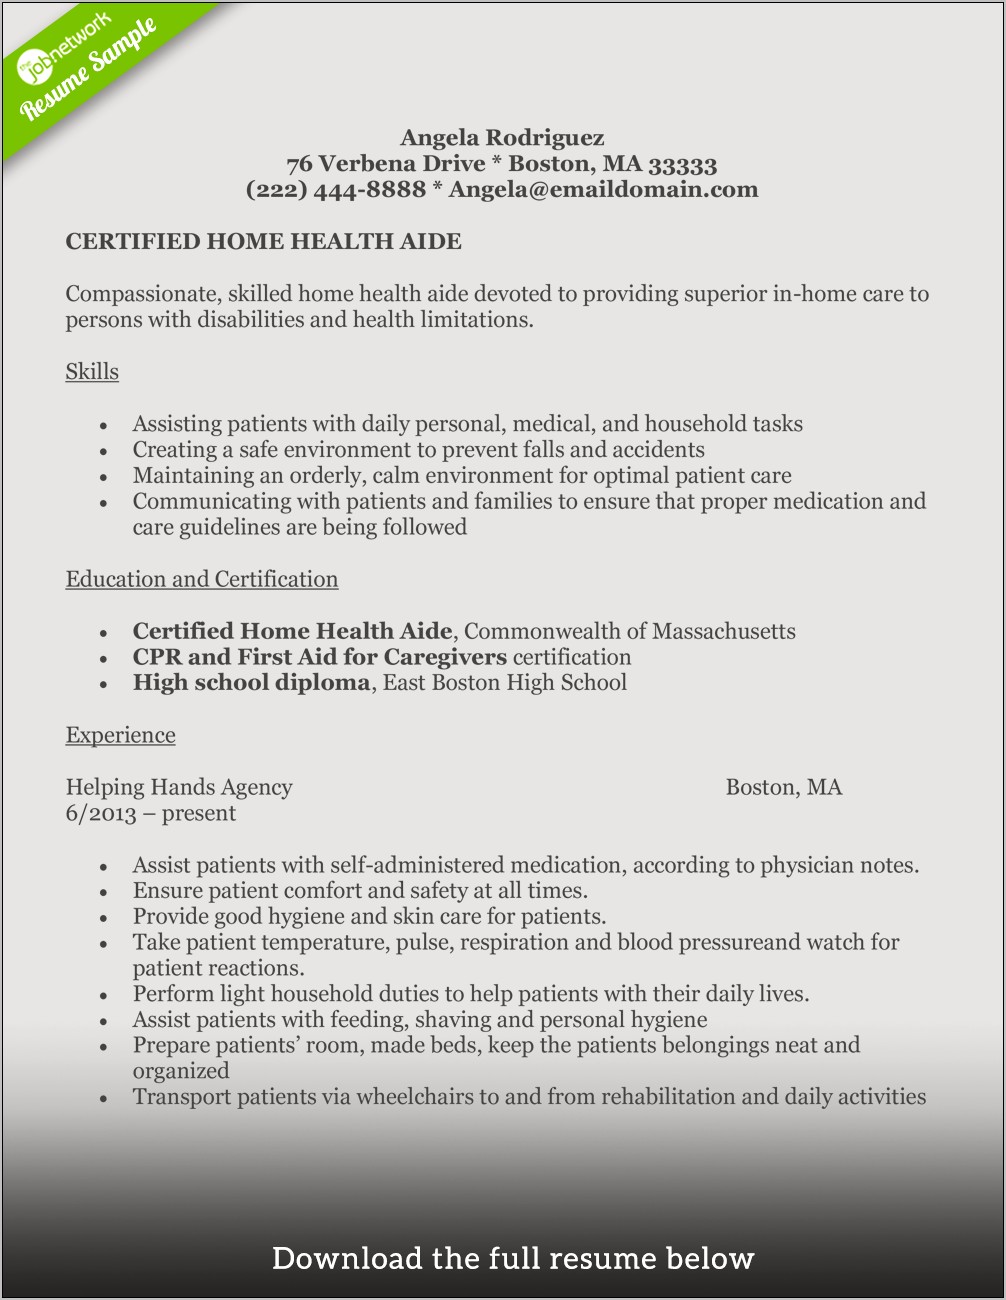 Resume Objectives For Caregiver Entry Level Jobs